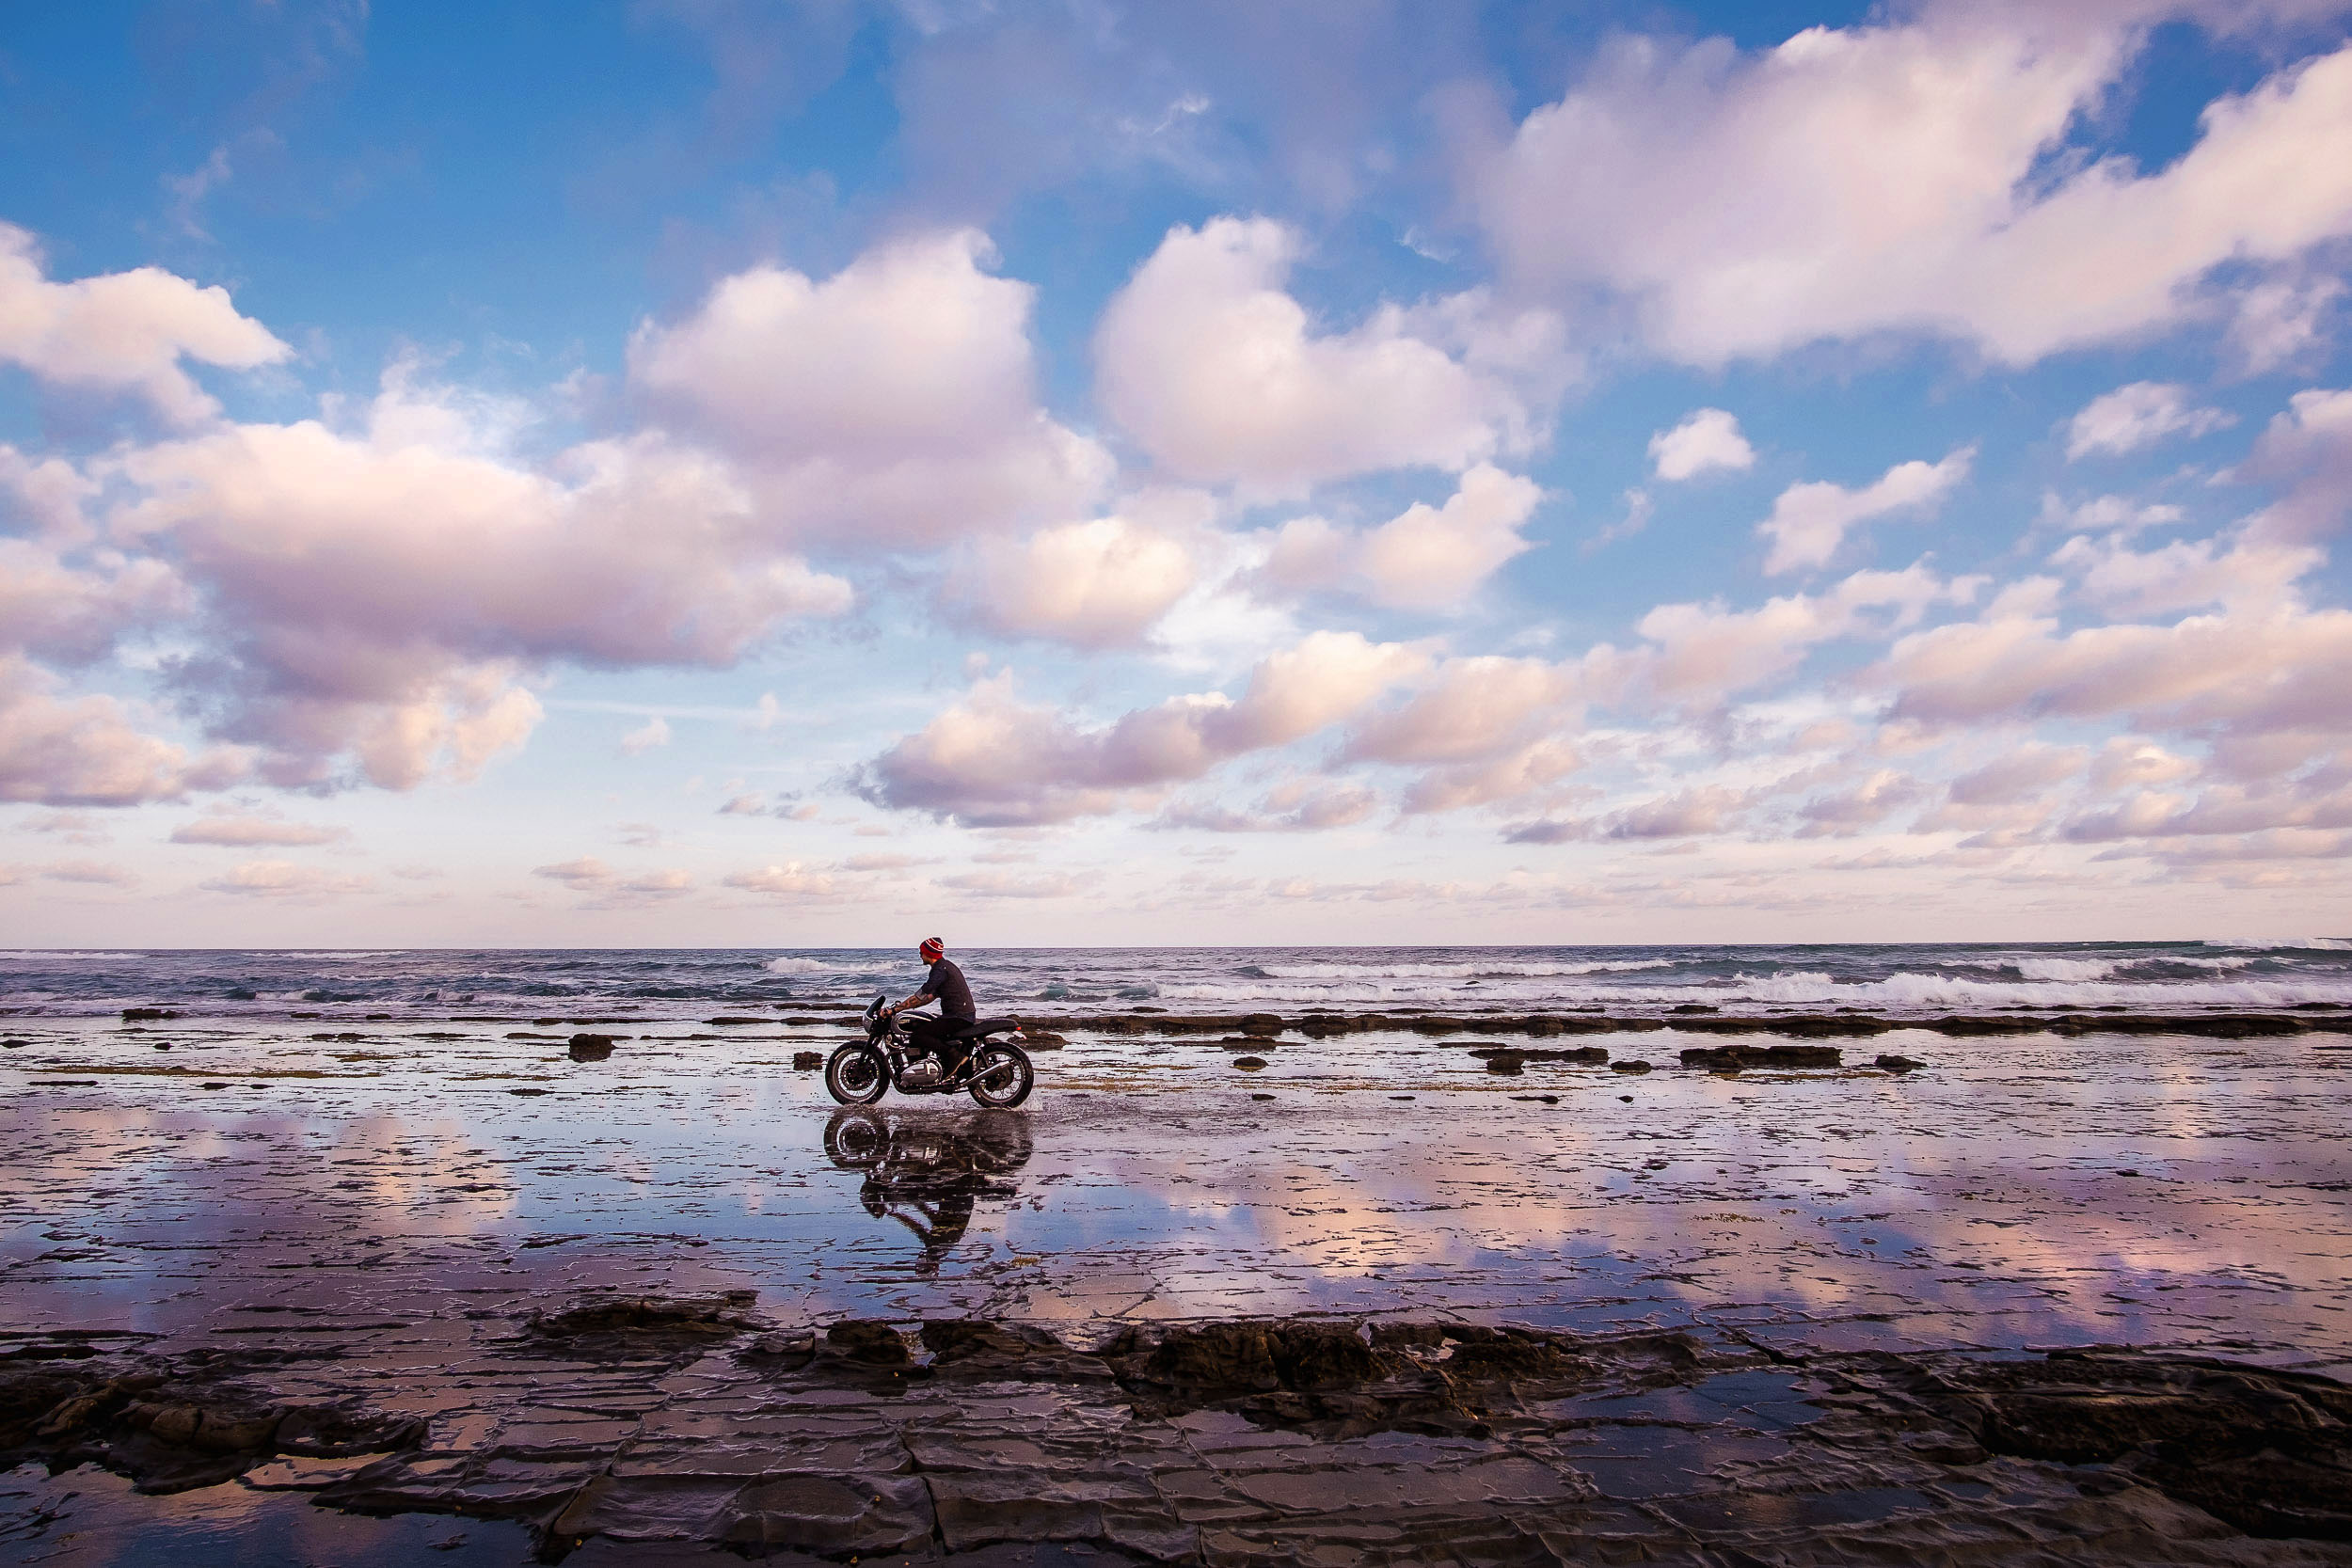 A motorcycle rider on an Aussie beach at dusk